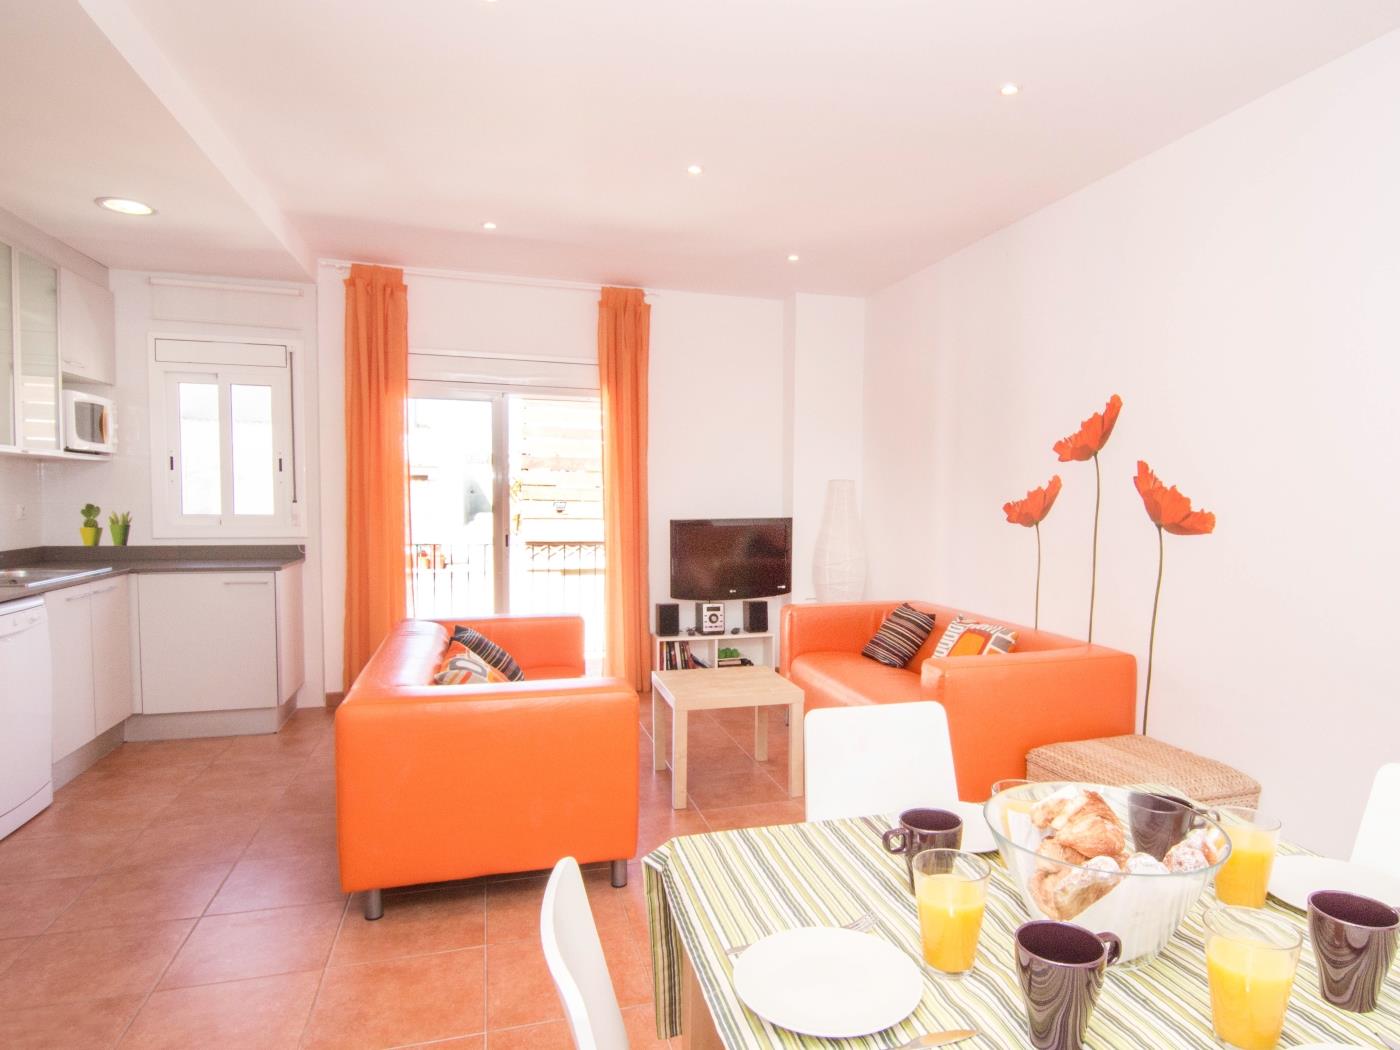 CHILL OUT BY BLAUSITGES Agradable apartamento con gran terraza en Sitges. en SITGES